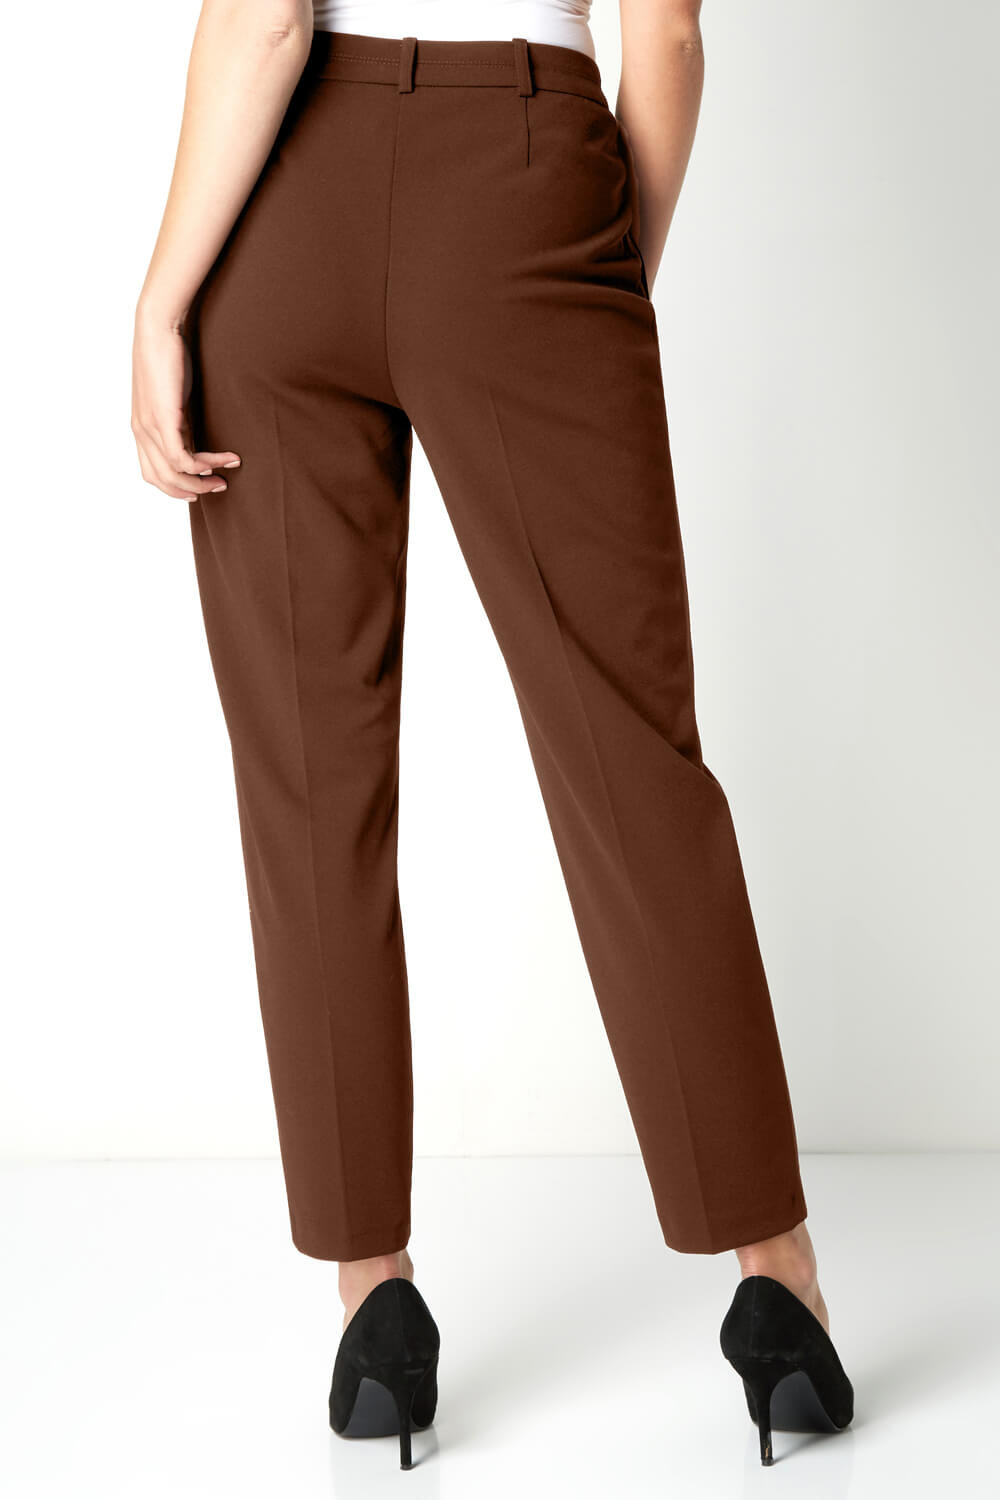 Chocolate Short Straight Leg Stretch Trouser, Image 3 of 3